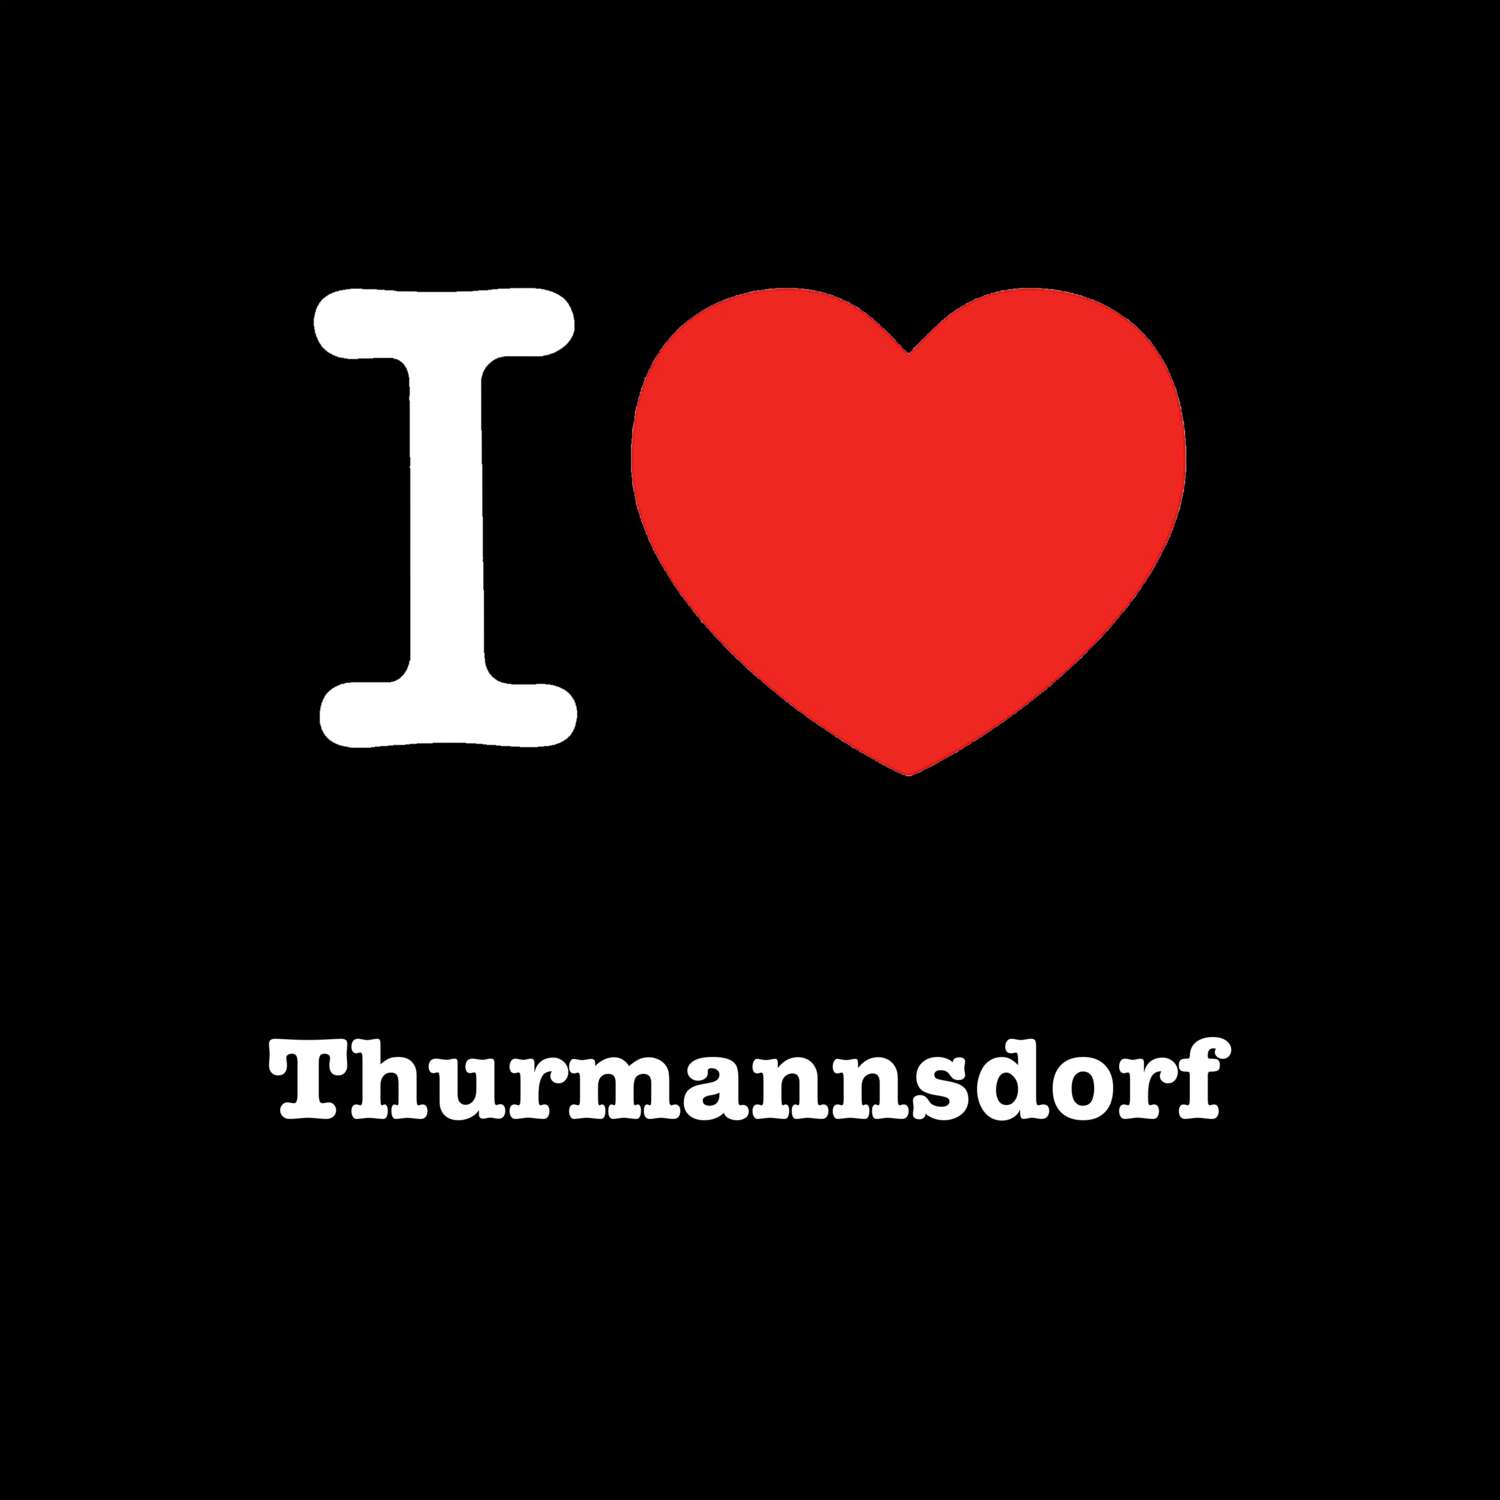 Thurmannsdorf T-Shirt »I love«